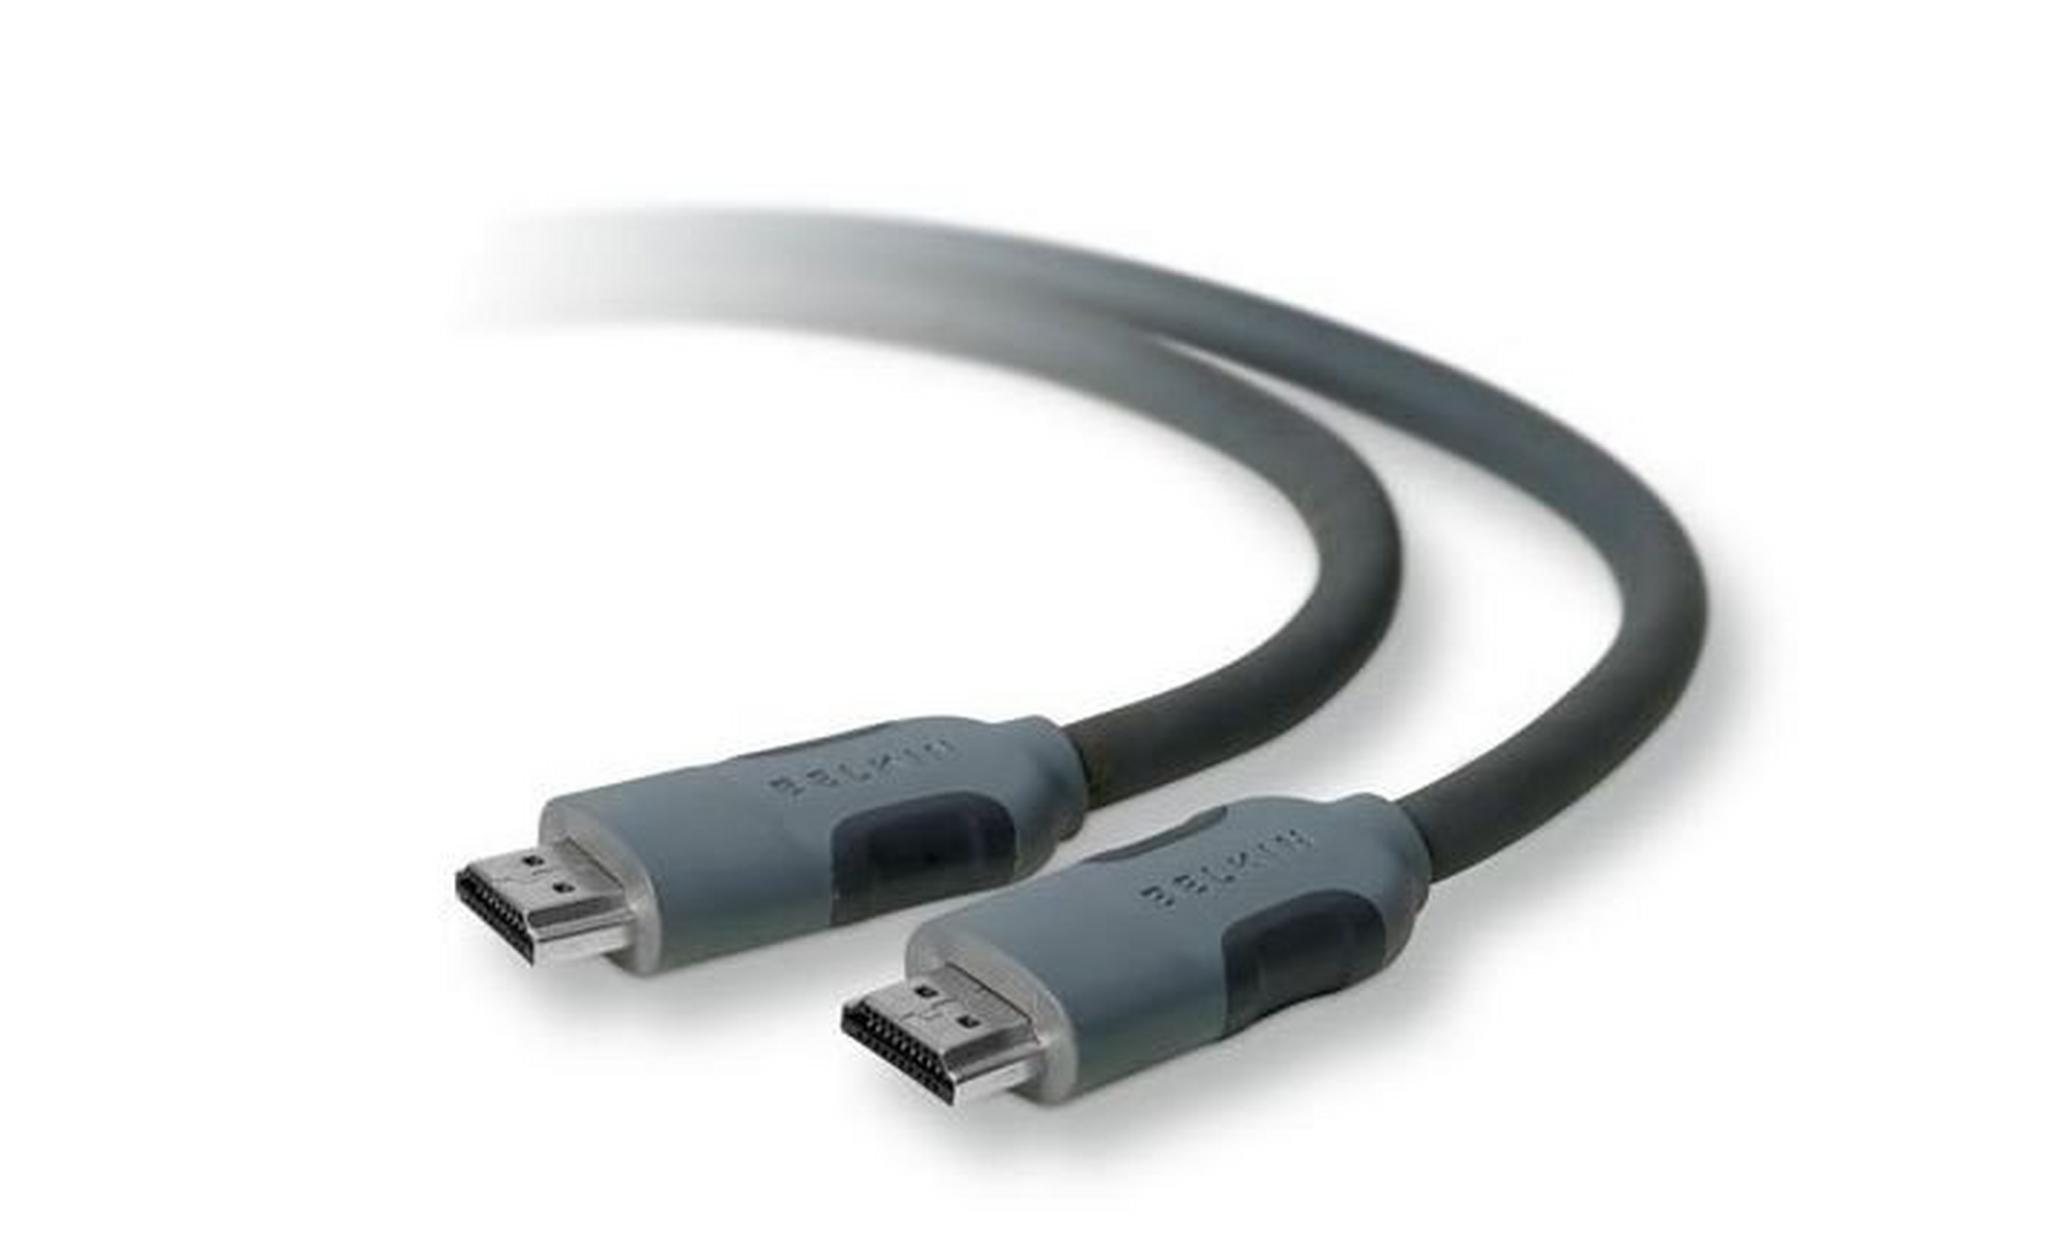 Belkin 3M HDMI Audio Video Cable - Black (F3Y017CP3M-BLK)